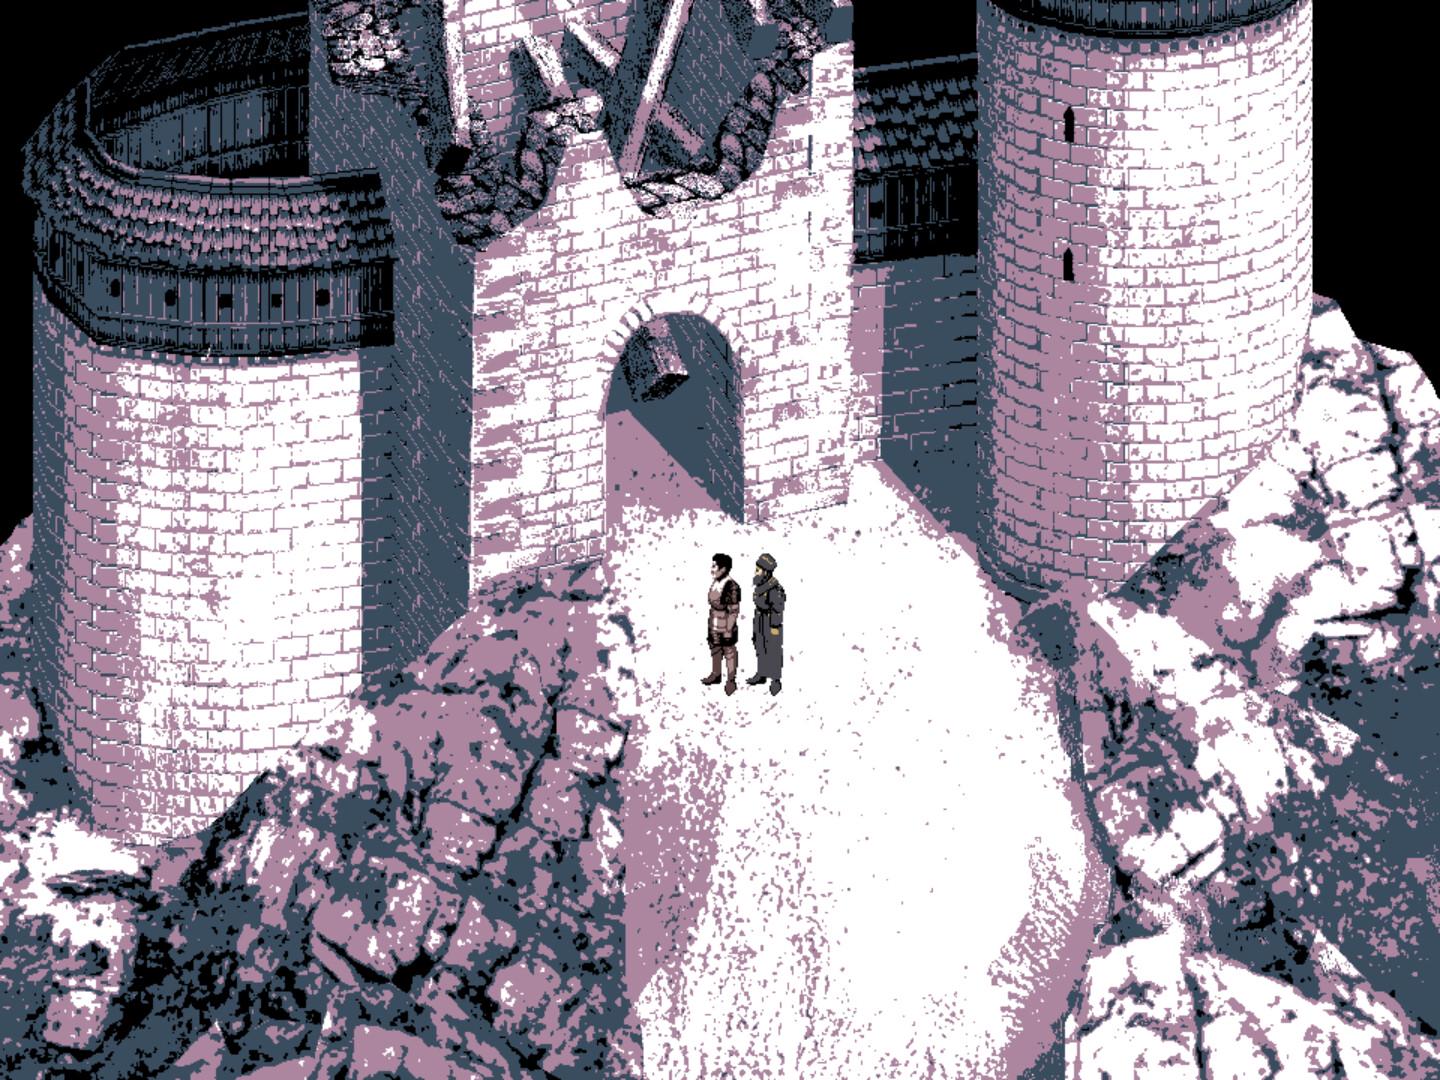 GB风的博德之门，复古RPG游戏《Felvidek》今年4月发布-悟饭游戏厅